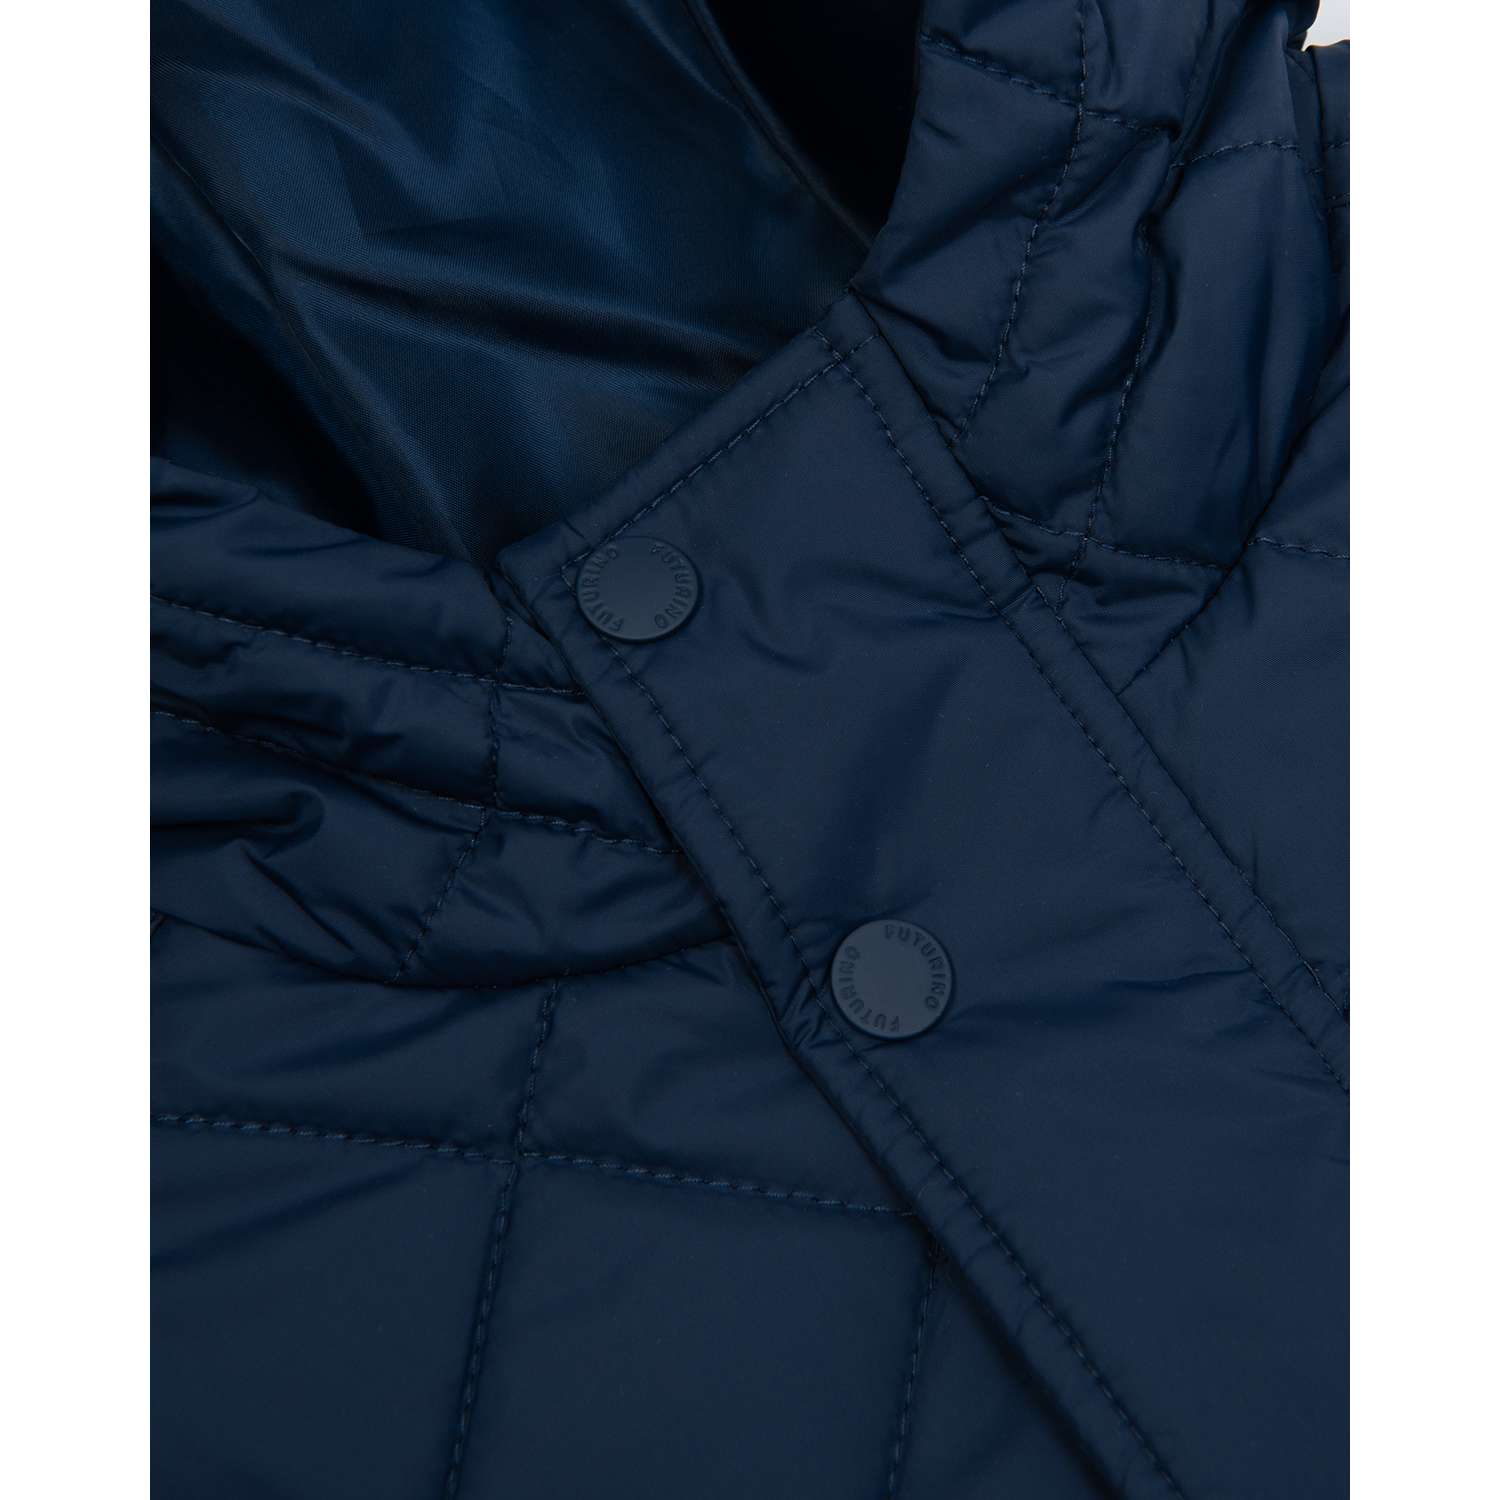 Куртка Futurino S23FU5-B507tb-D6 - фото 5